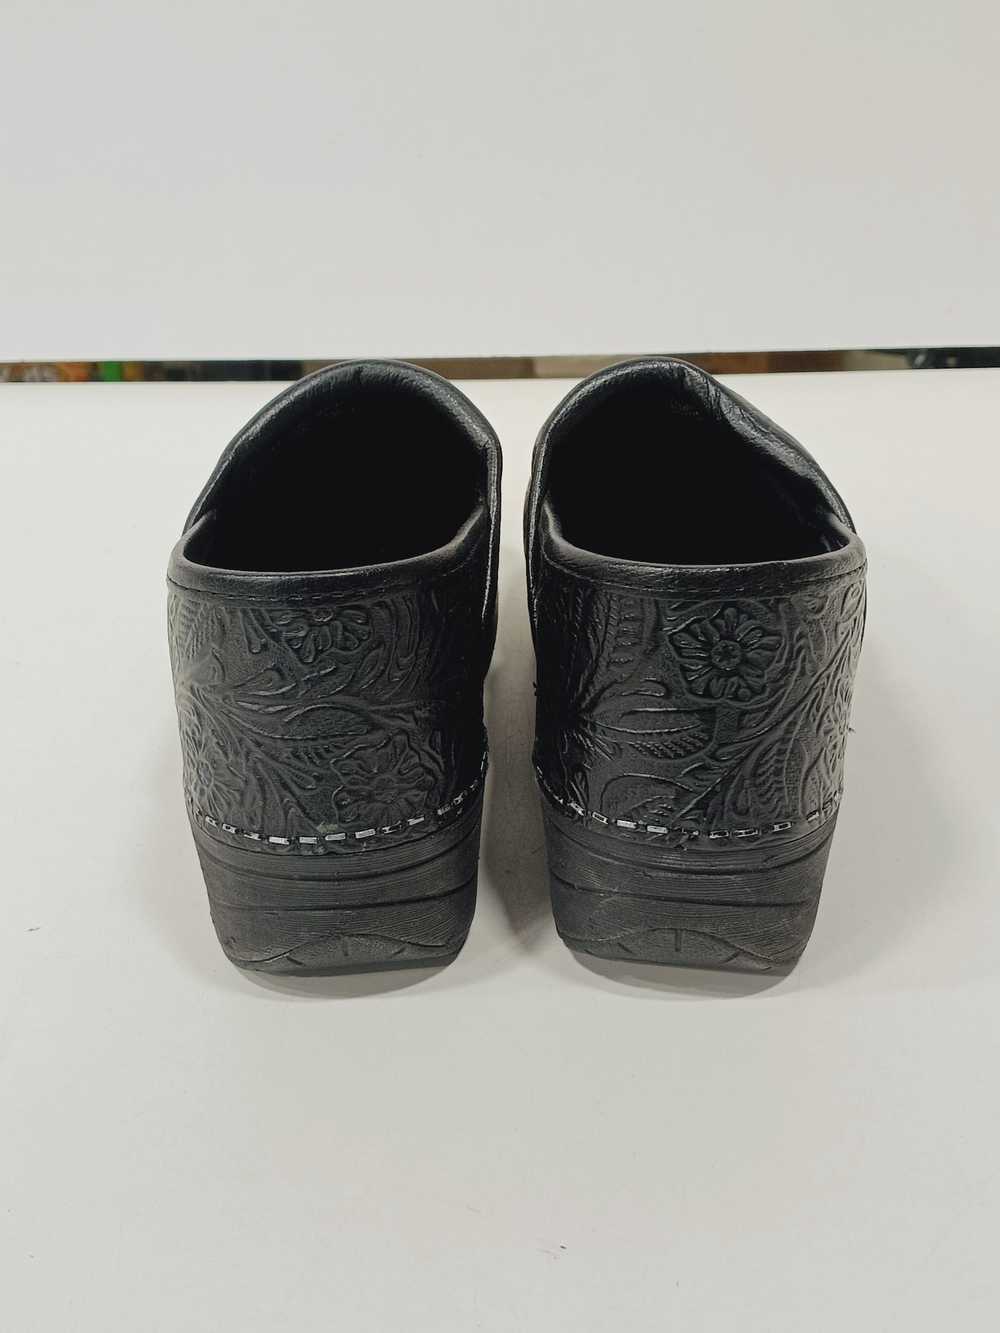 Dansko Women's Black Tooled Leather Clogs Size 37 - image 4